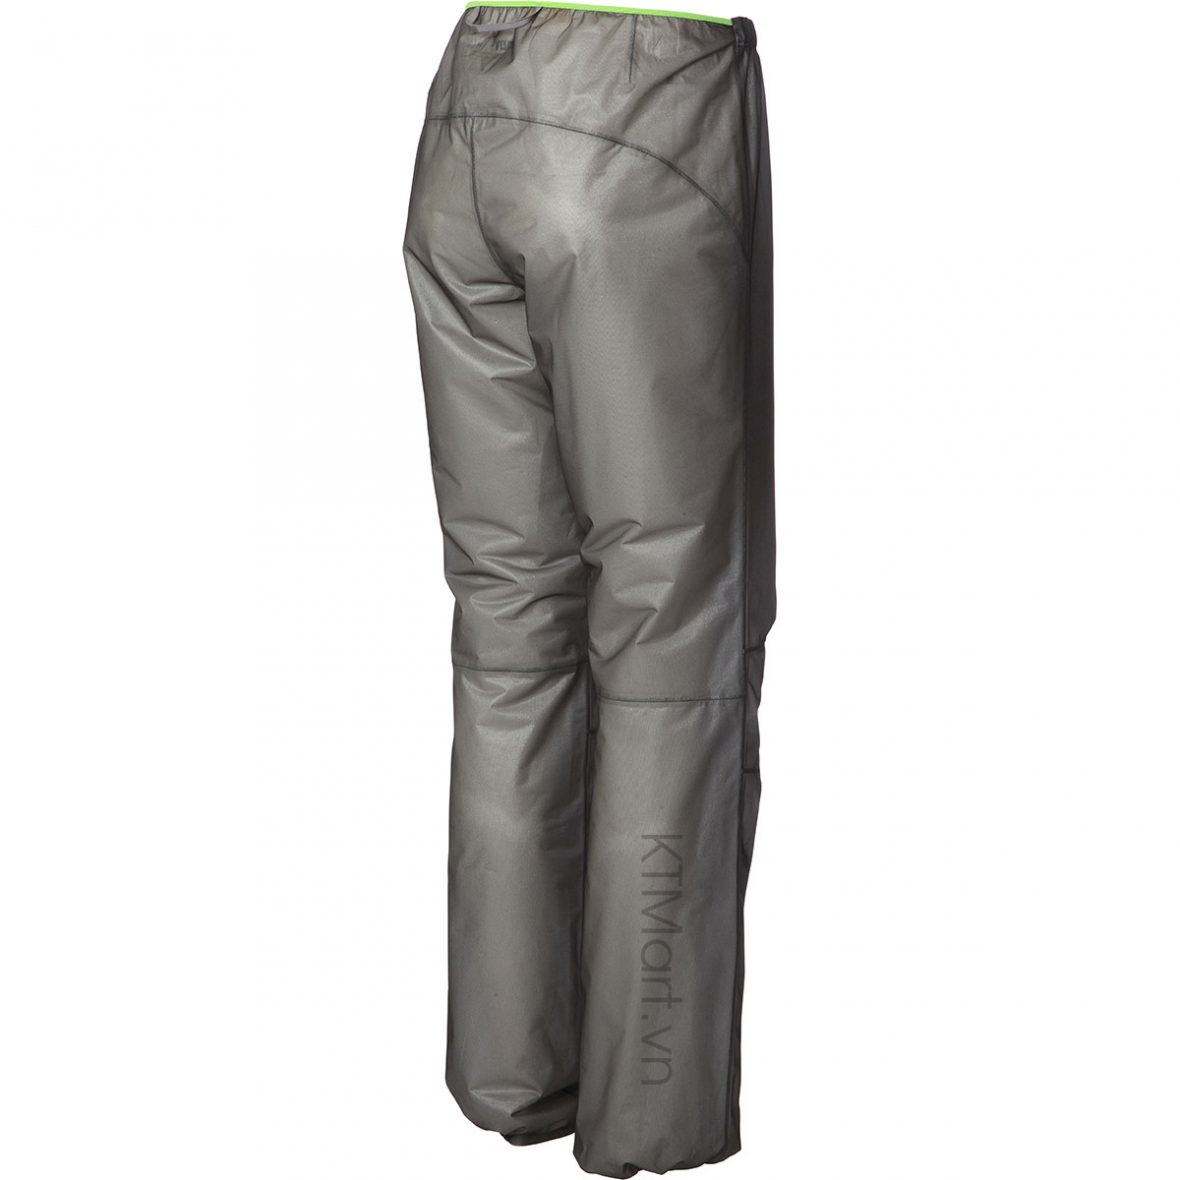 Inov-8 Ultrapant Waterproof Trousers 000439 ktmart 2